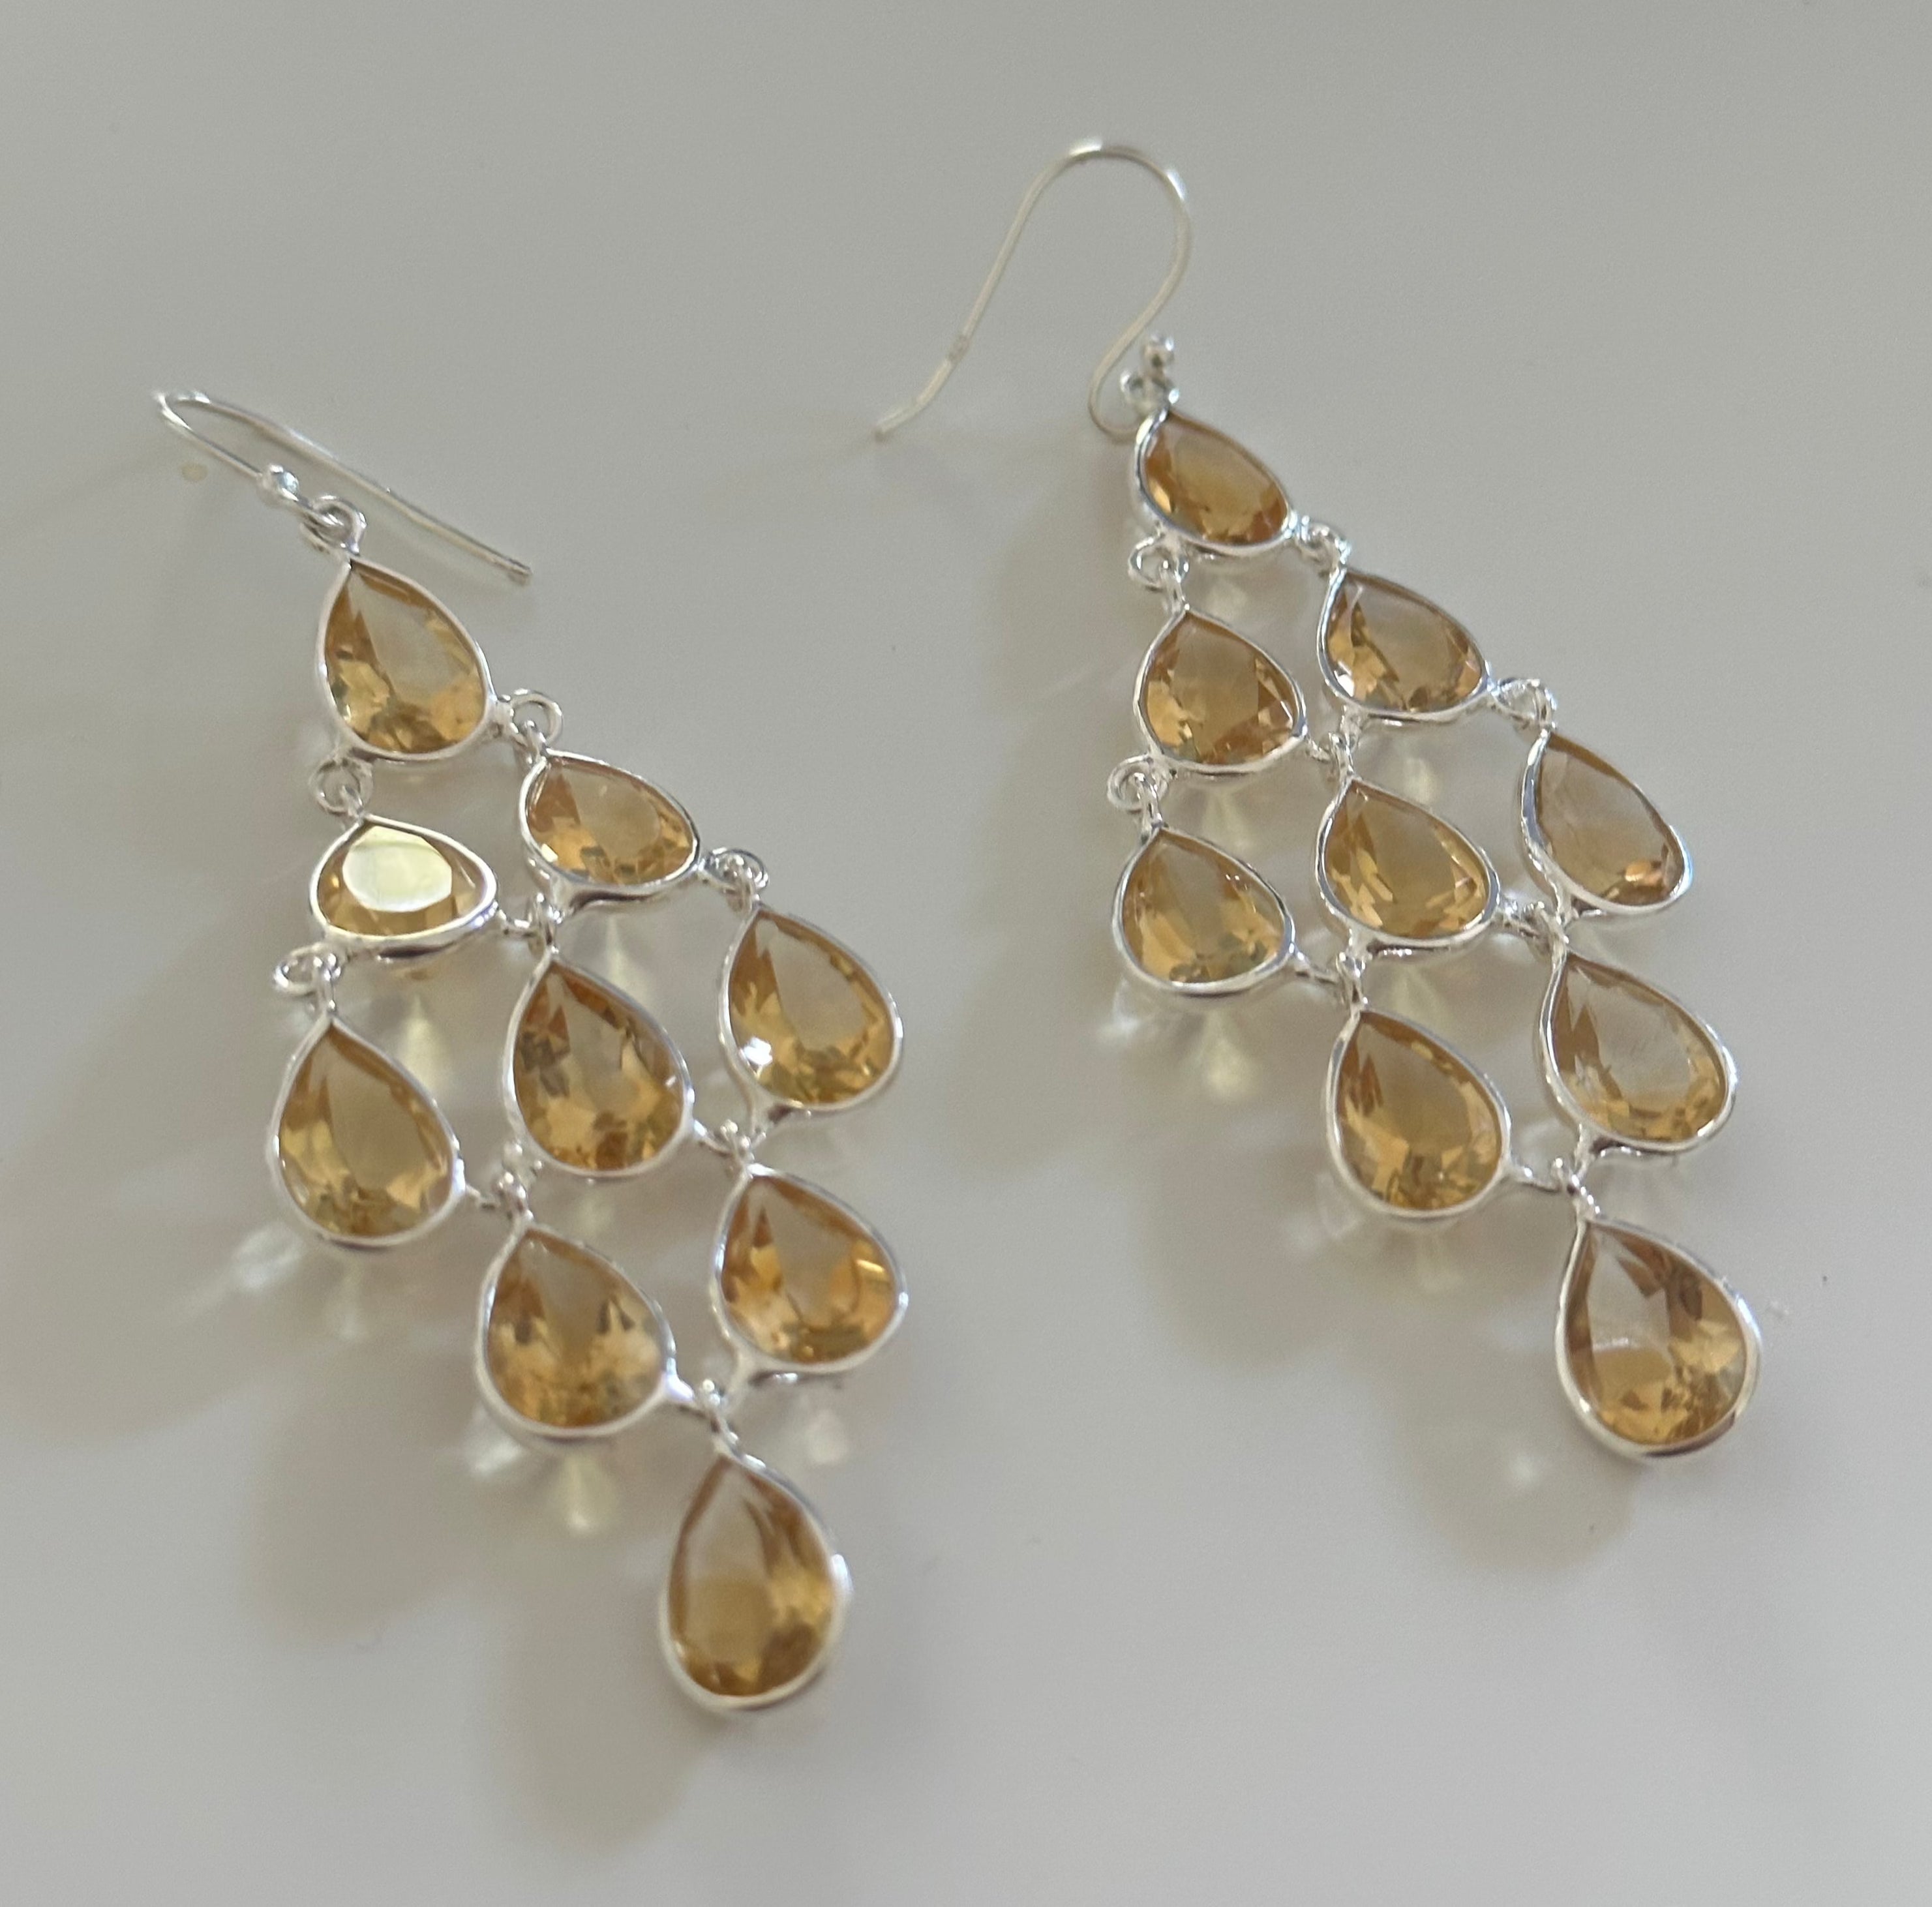 Sterling Silver Chandelier Earrings with Natural Gemstones - Citrine